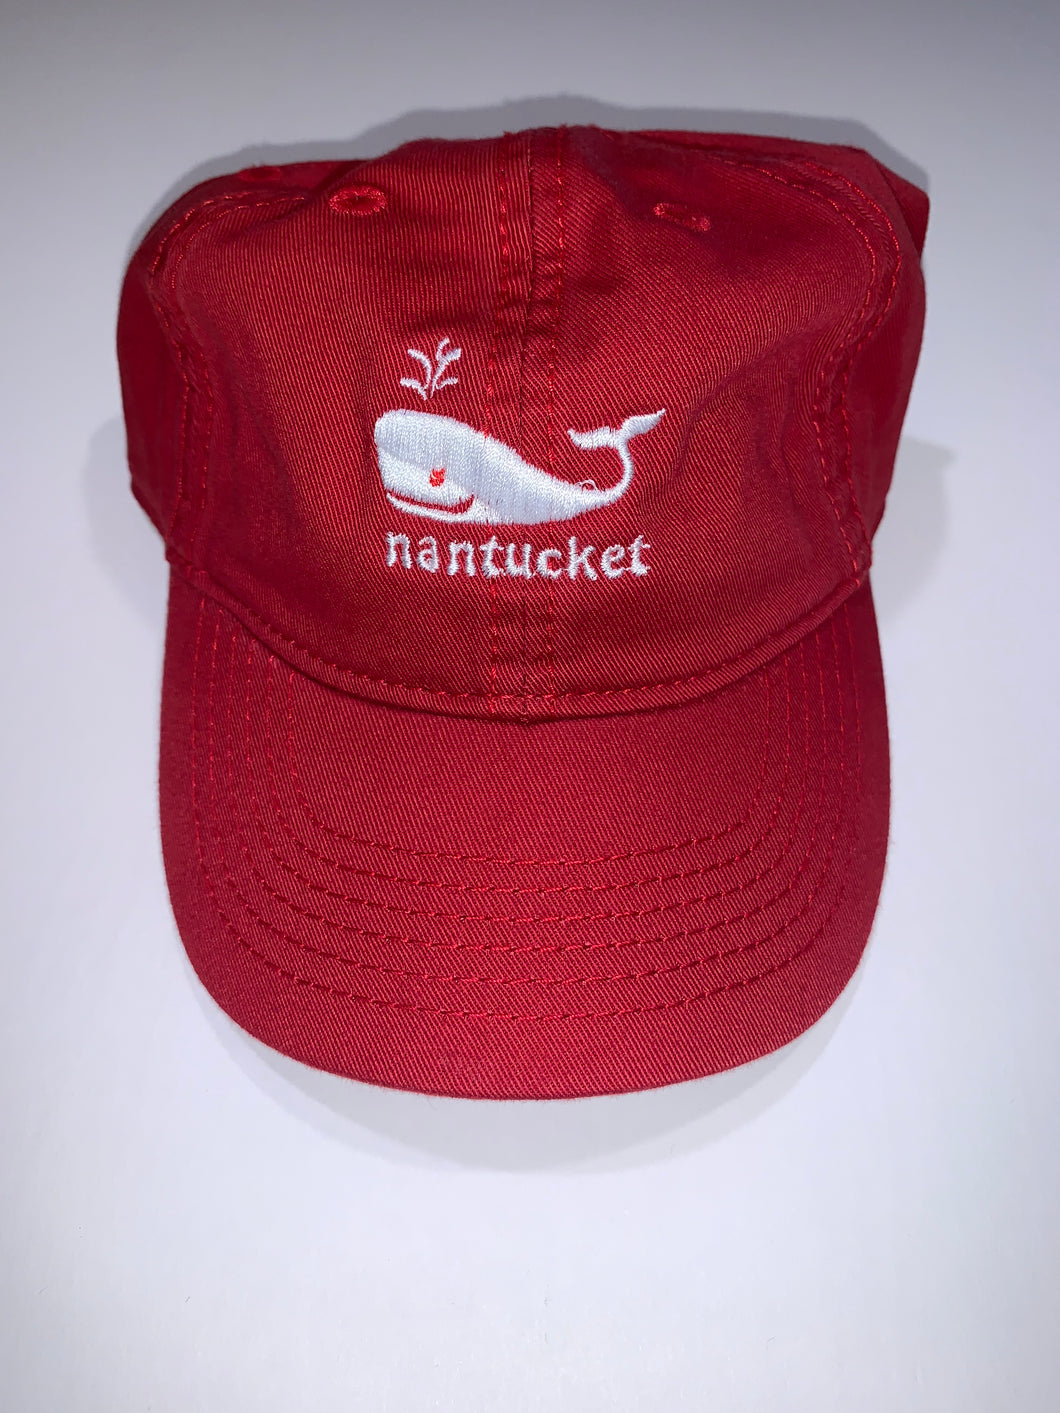 Red Nantucket baseball hat